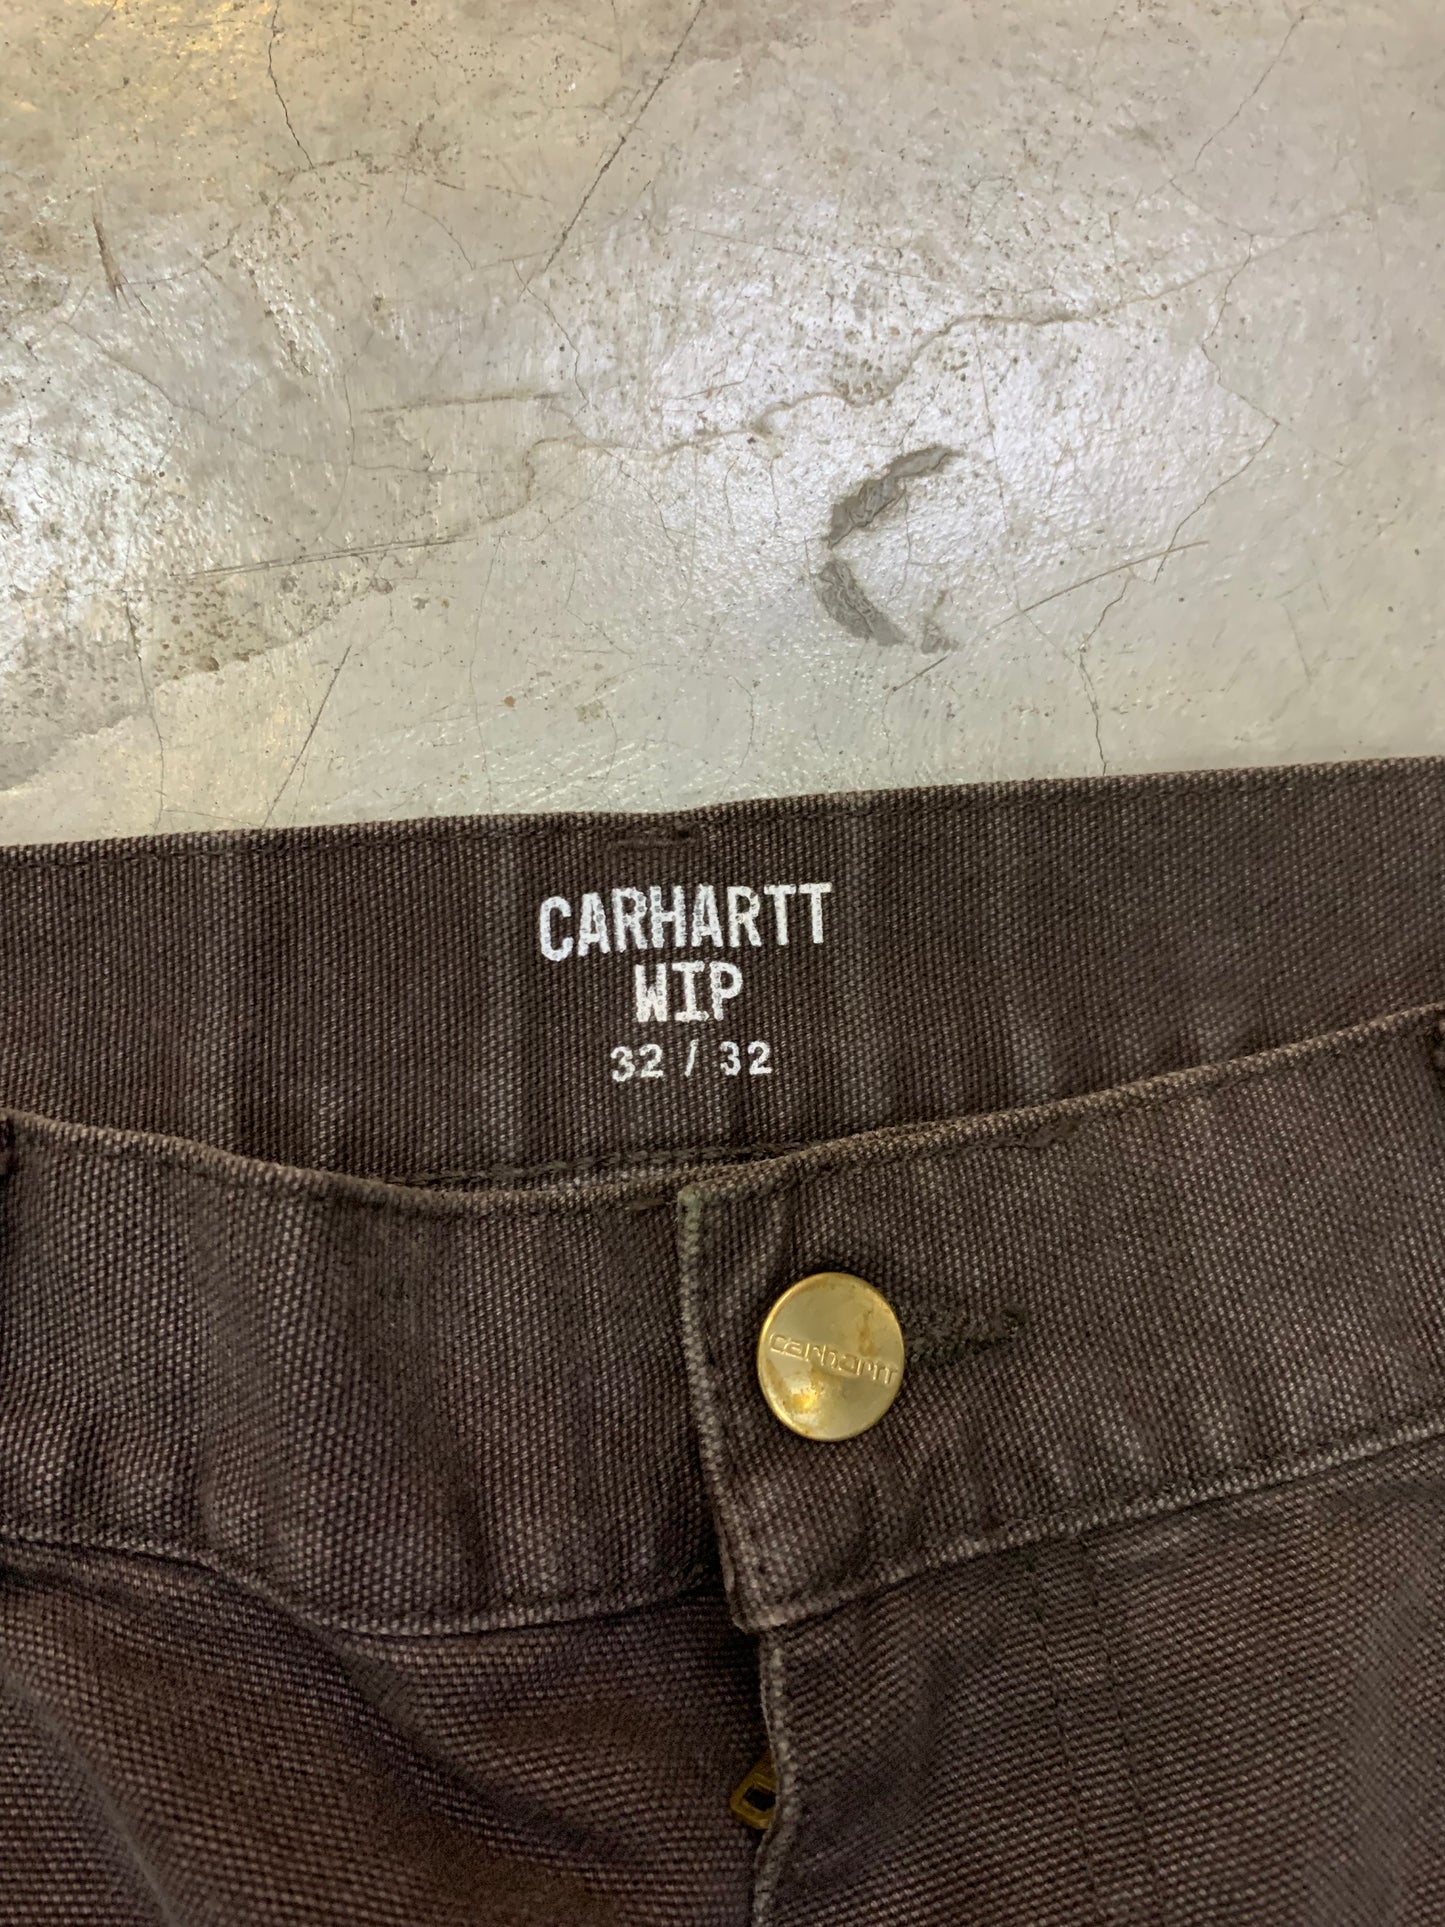 (34) Carhartt Wip Carpenter Pants